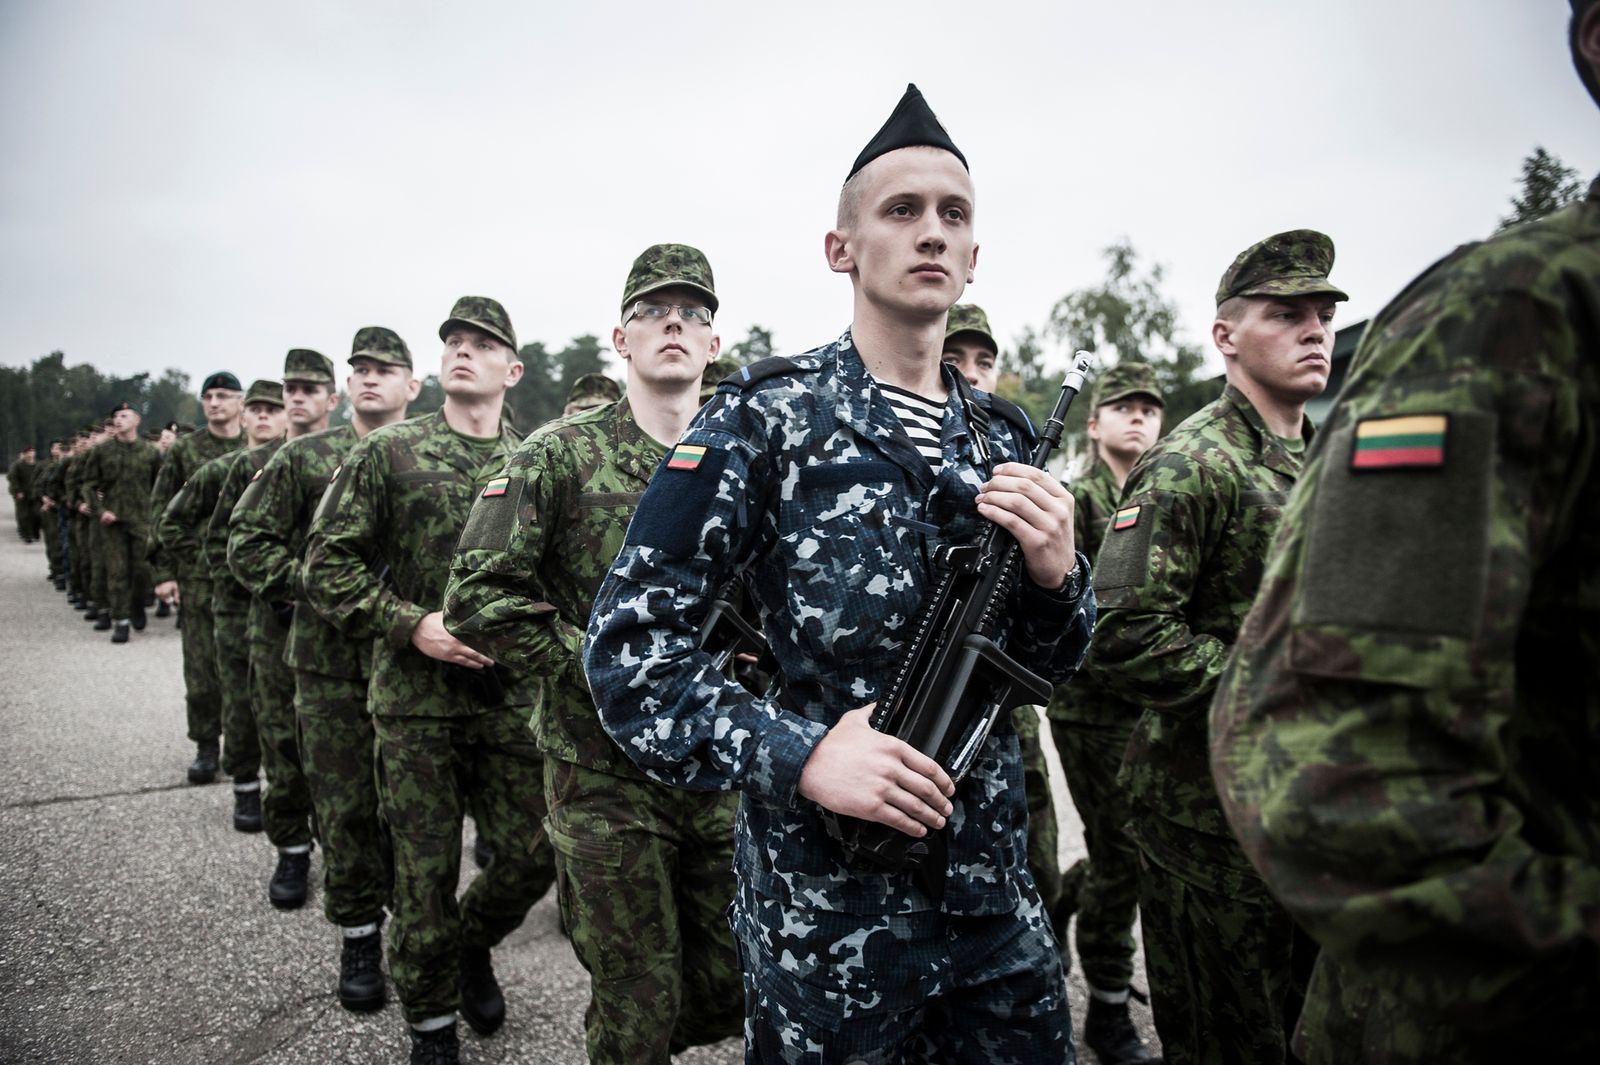 © Mattia Vacca - Soldiers marching inside Rukla’s base.